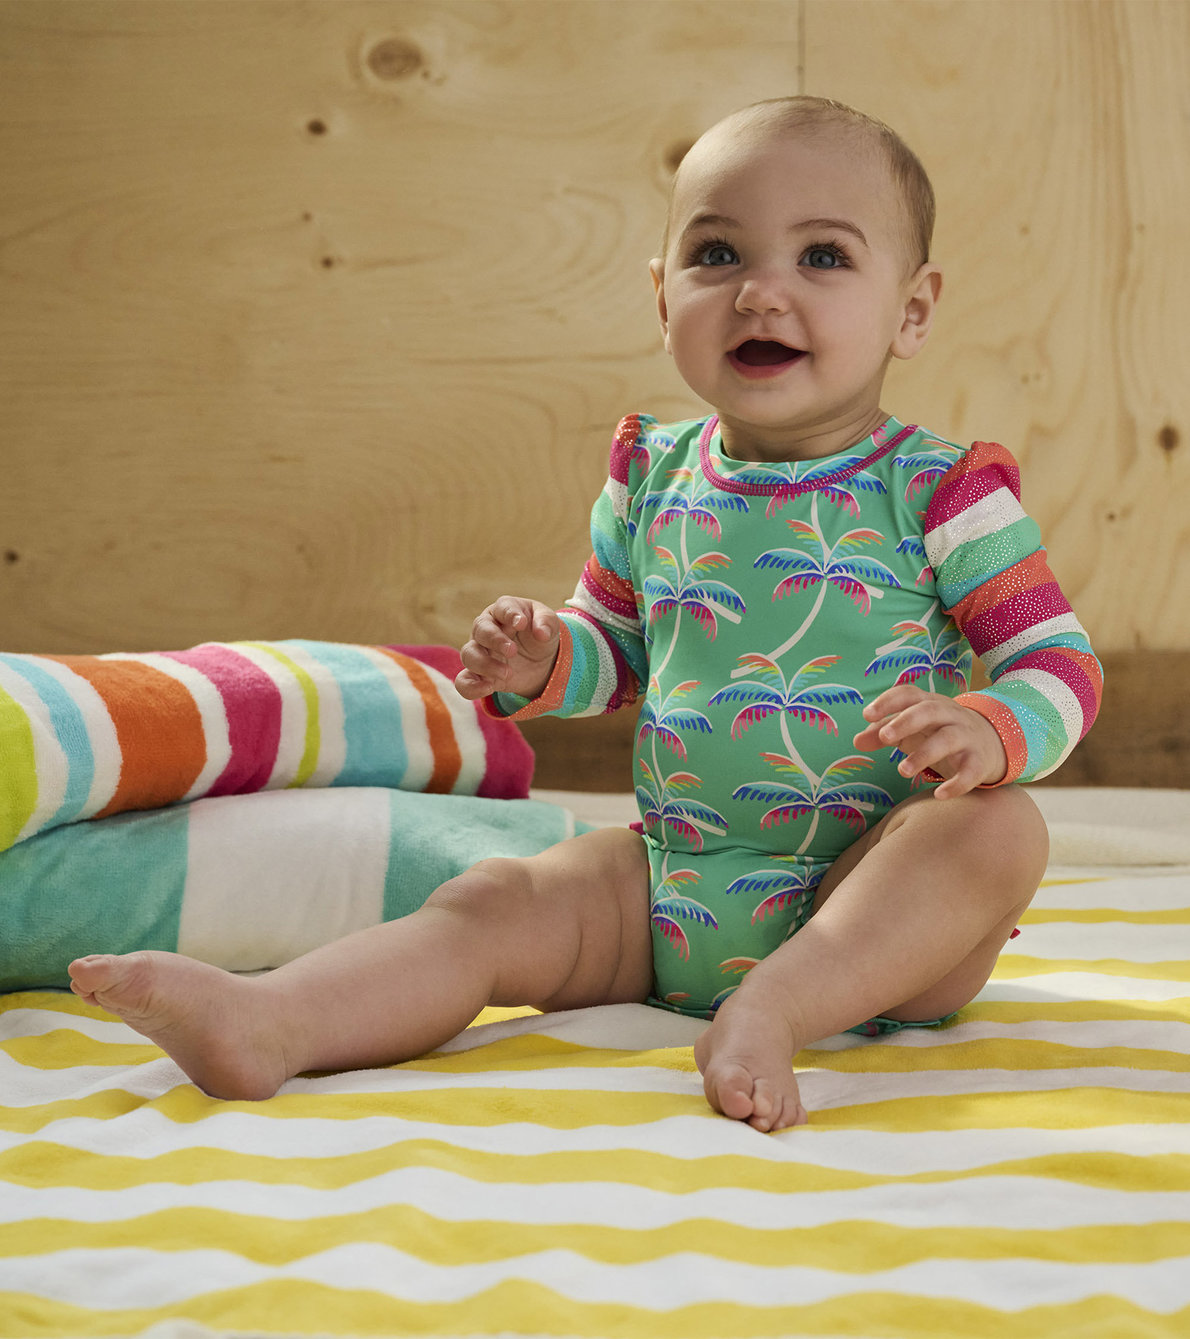 View larger image of Baby Girls Rainbow Palm Rashguard Swimsuit